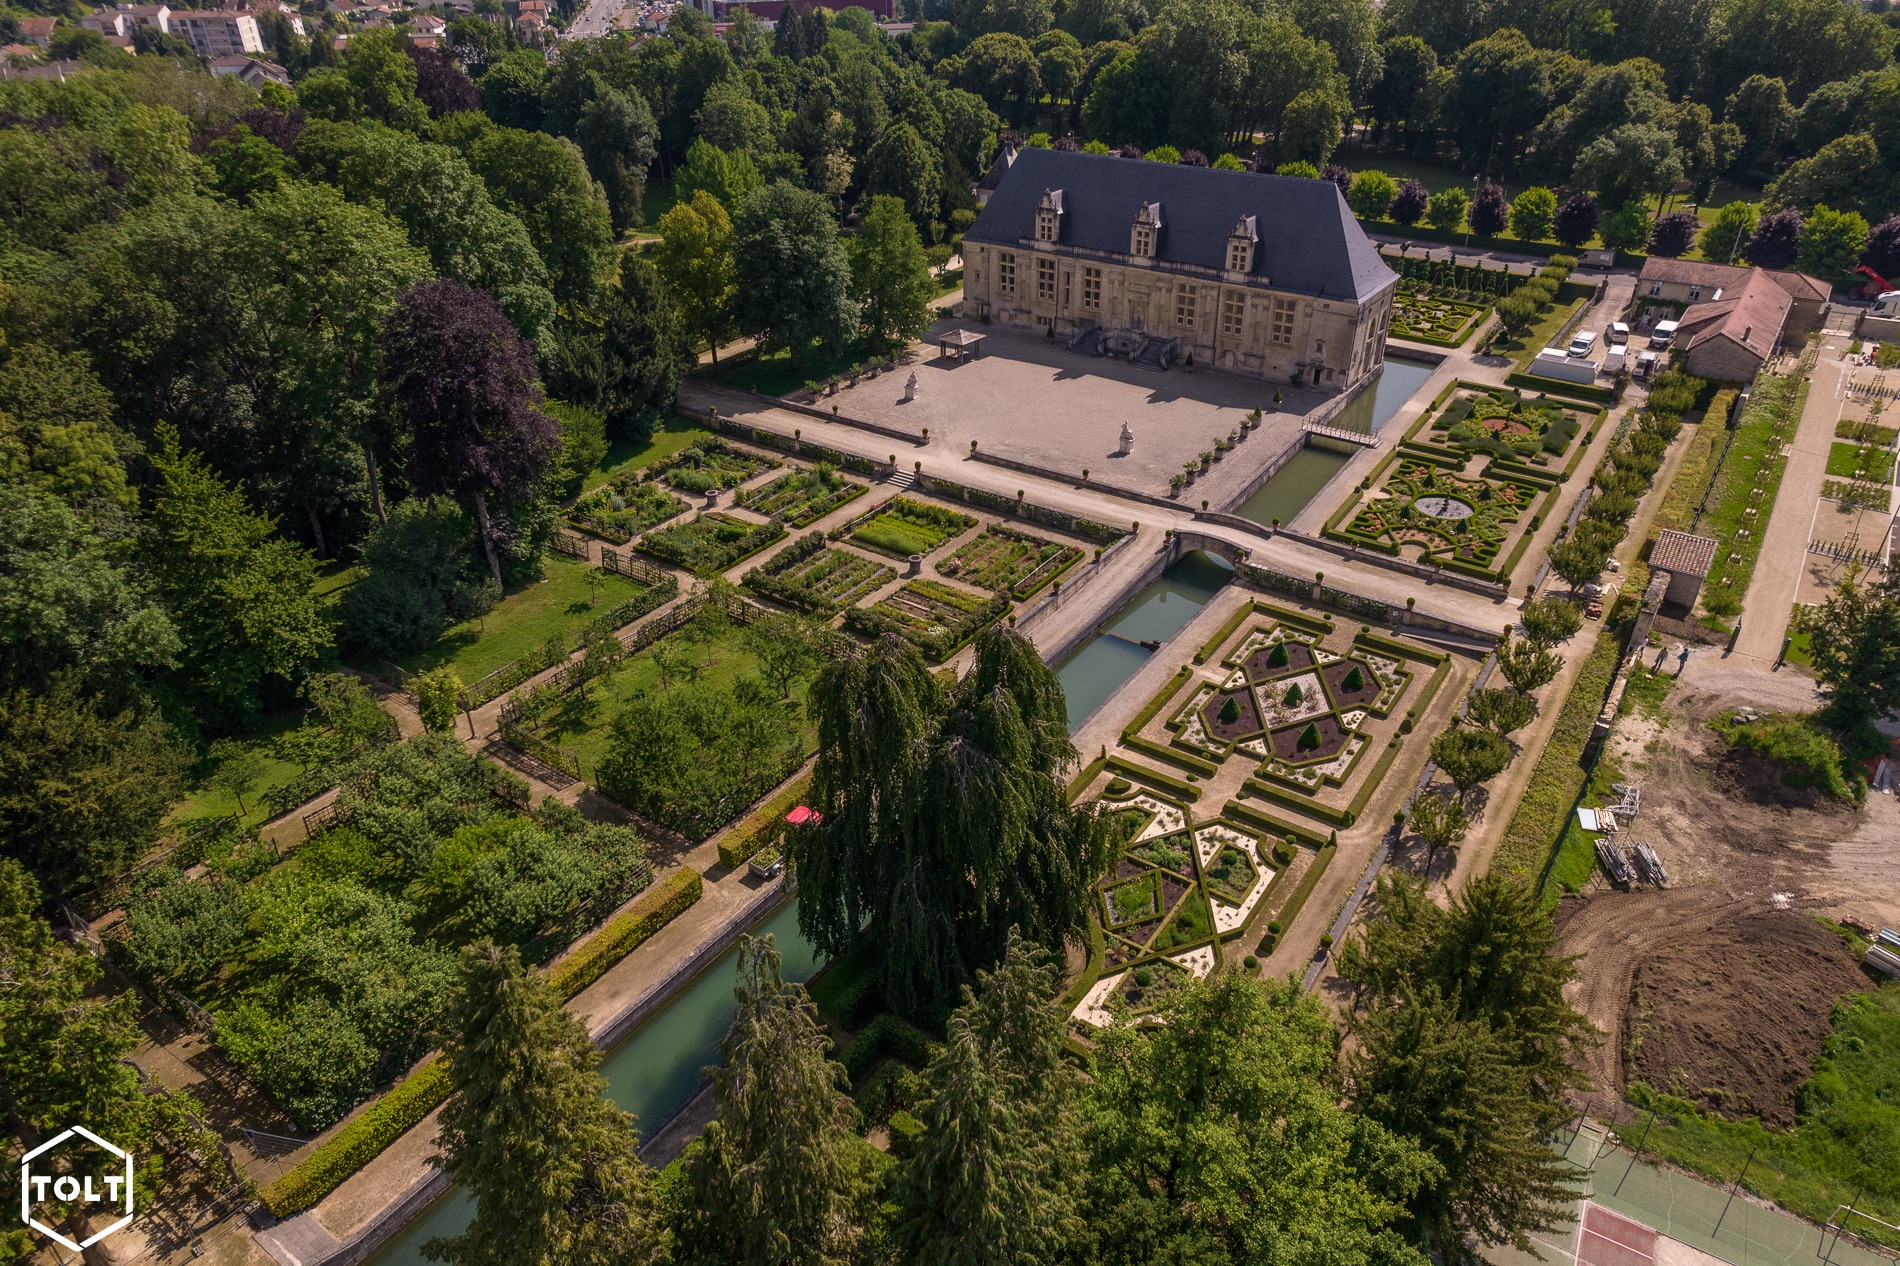 Château du Grand Jardin à Joinville